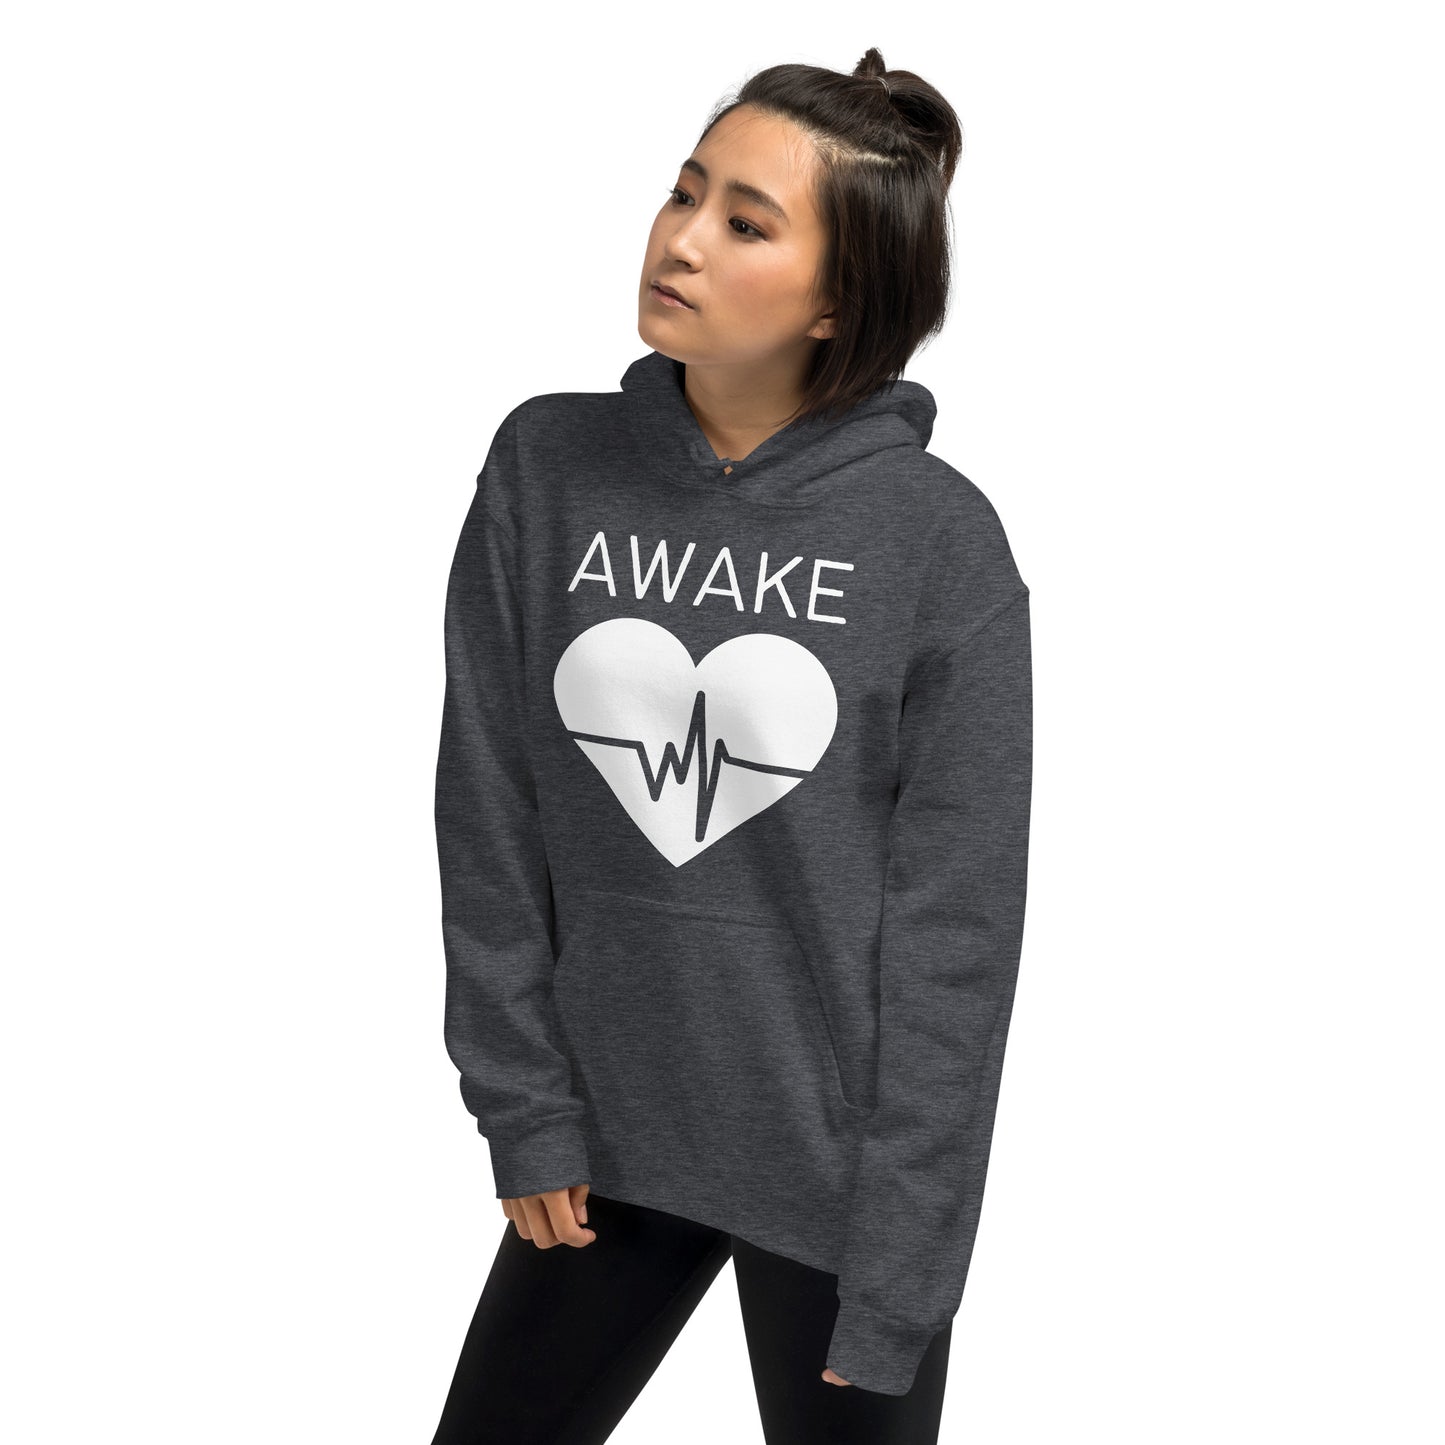 Awake Unisex Hoodie, Beating Heart Design, Inspirational Message